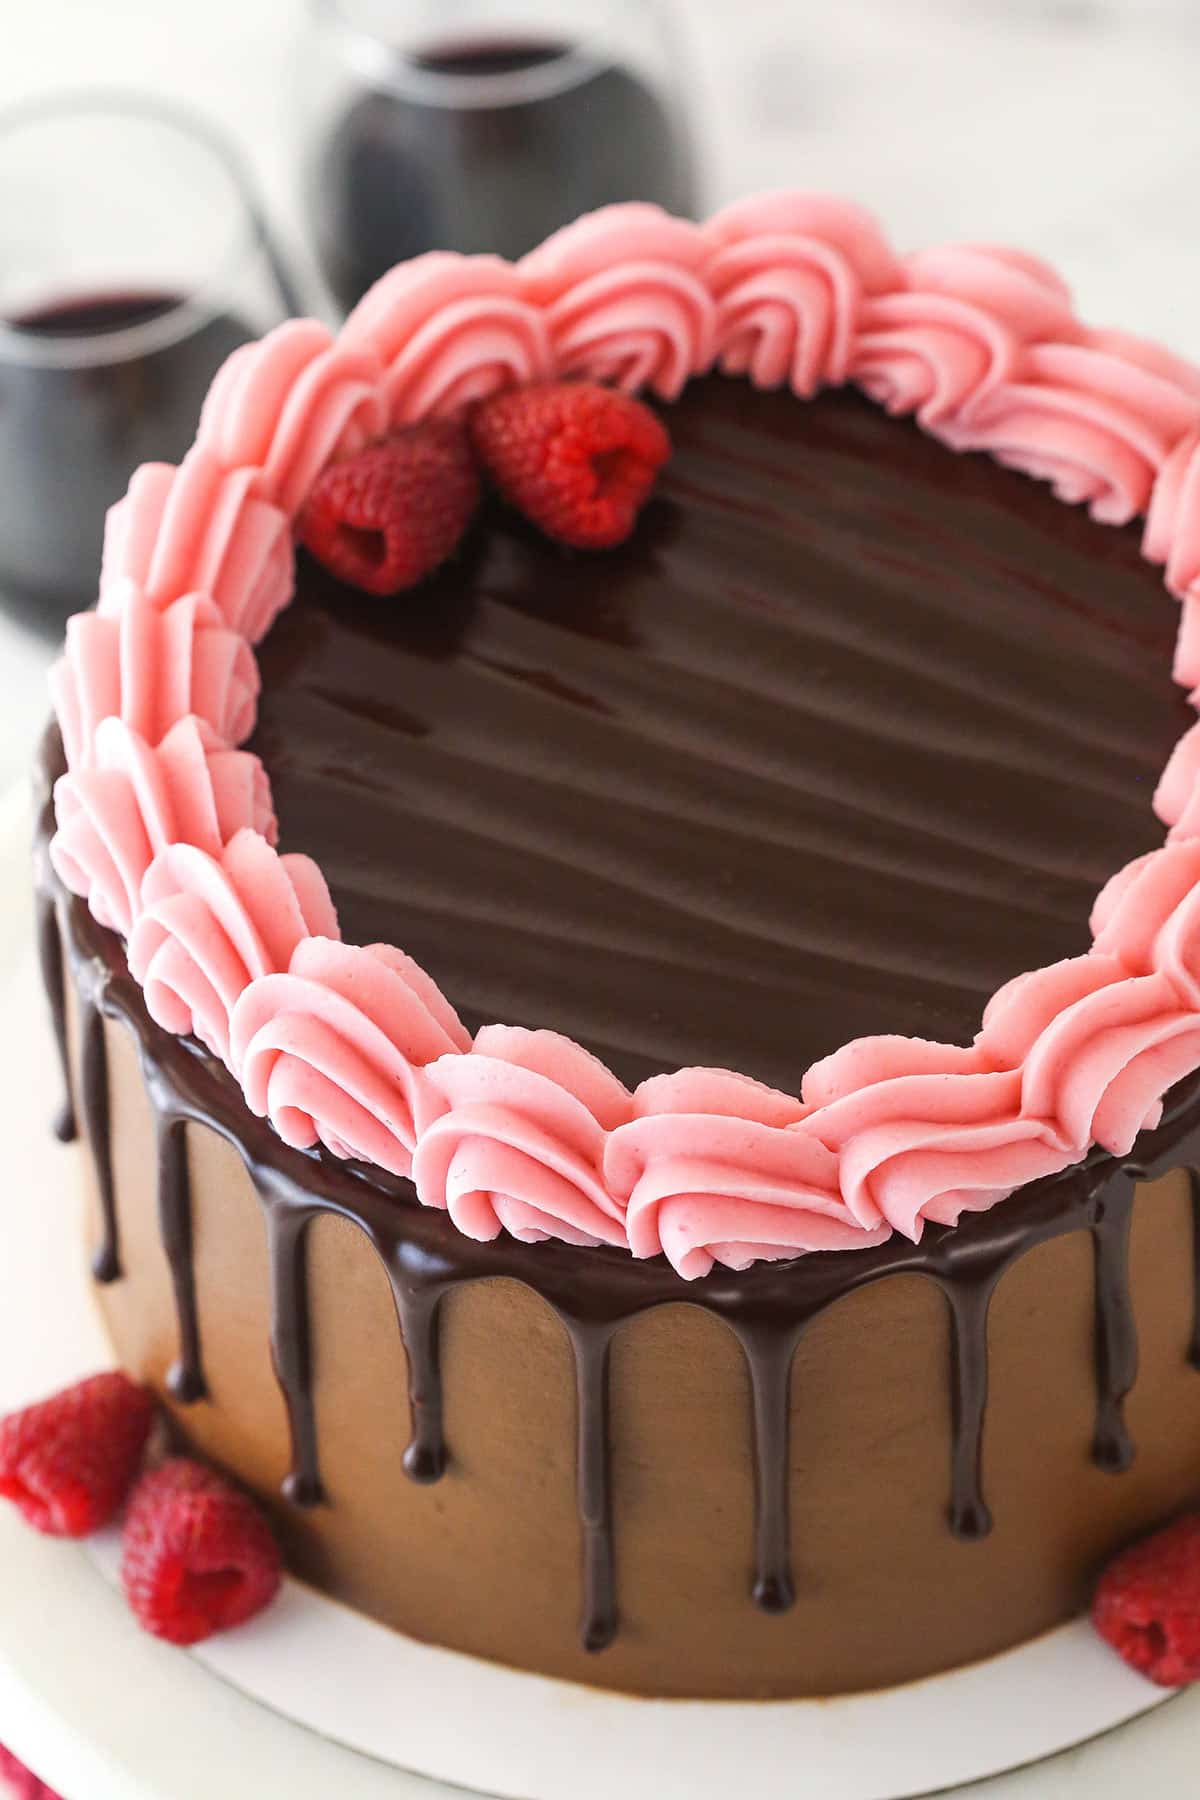 Overhead image of red wine chocolate cake.